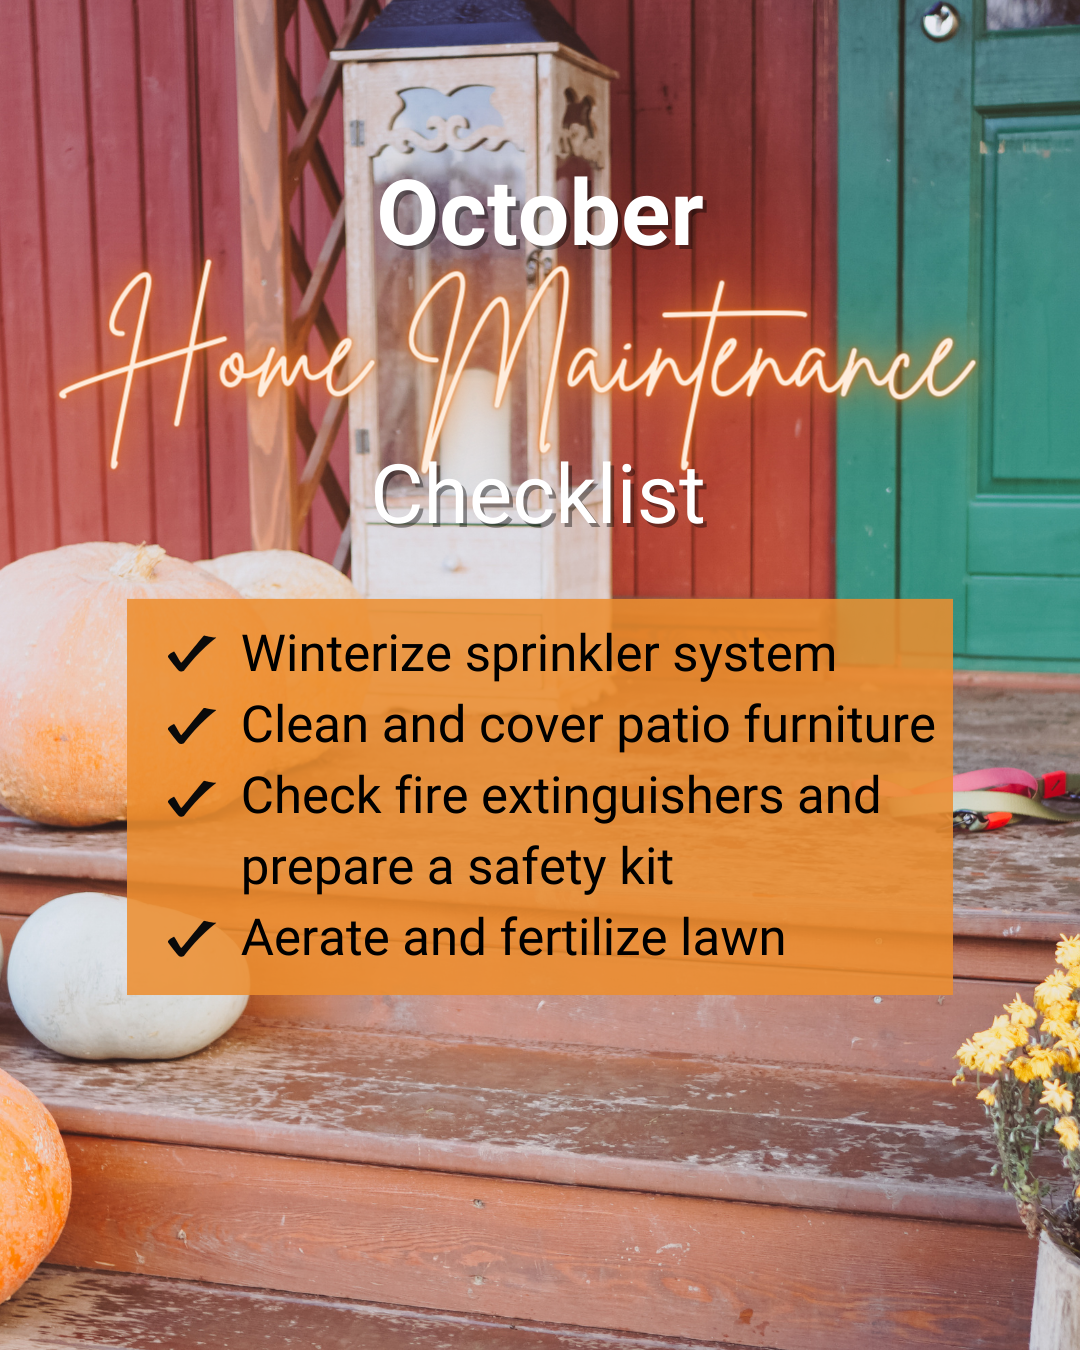 Oct. 2nd – Home Maintenance checklist